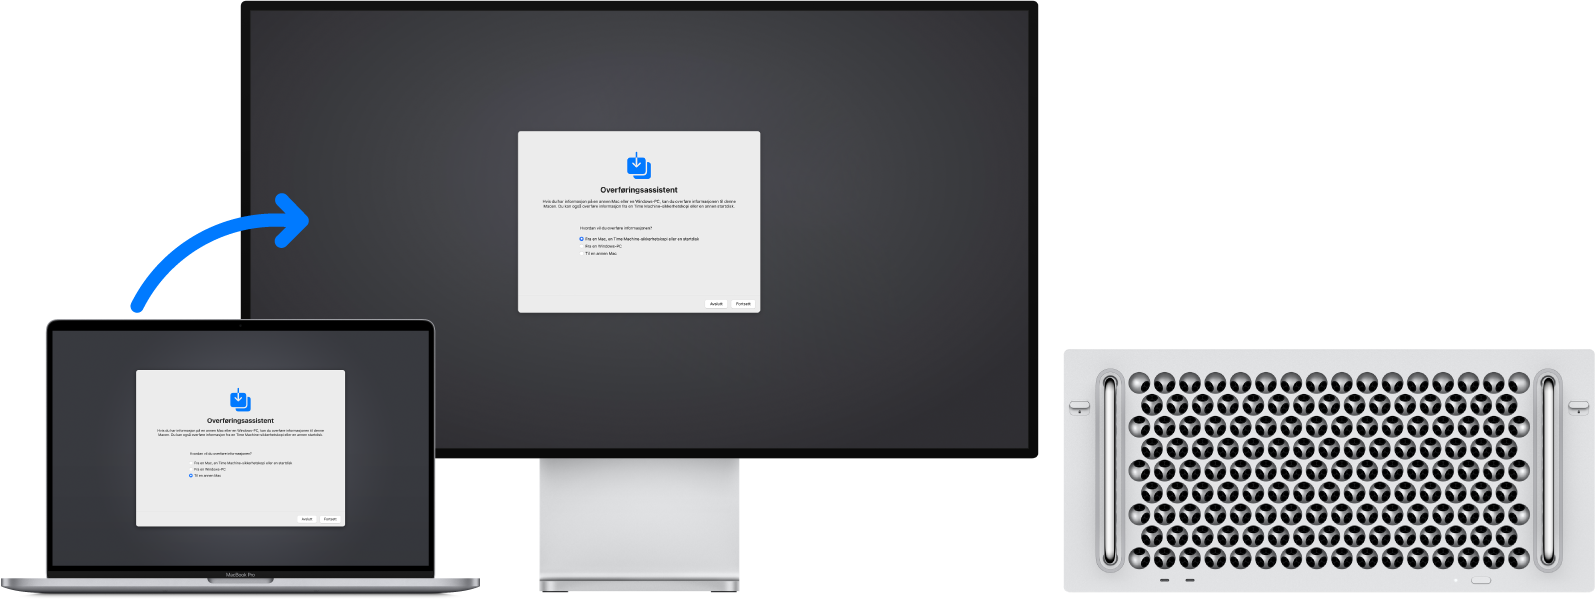 En MacBook Pro og en Mac Pro, som begge viser Overføringassistent-skjermen. En pil fra MacBook Pro til Mac Pro indikerer at det overføres data fra den ene datamaskinen til den andre.